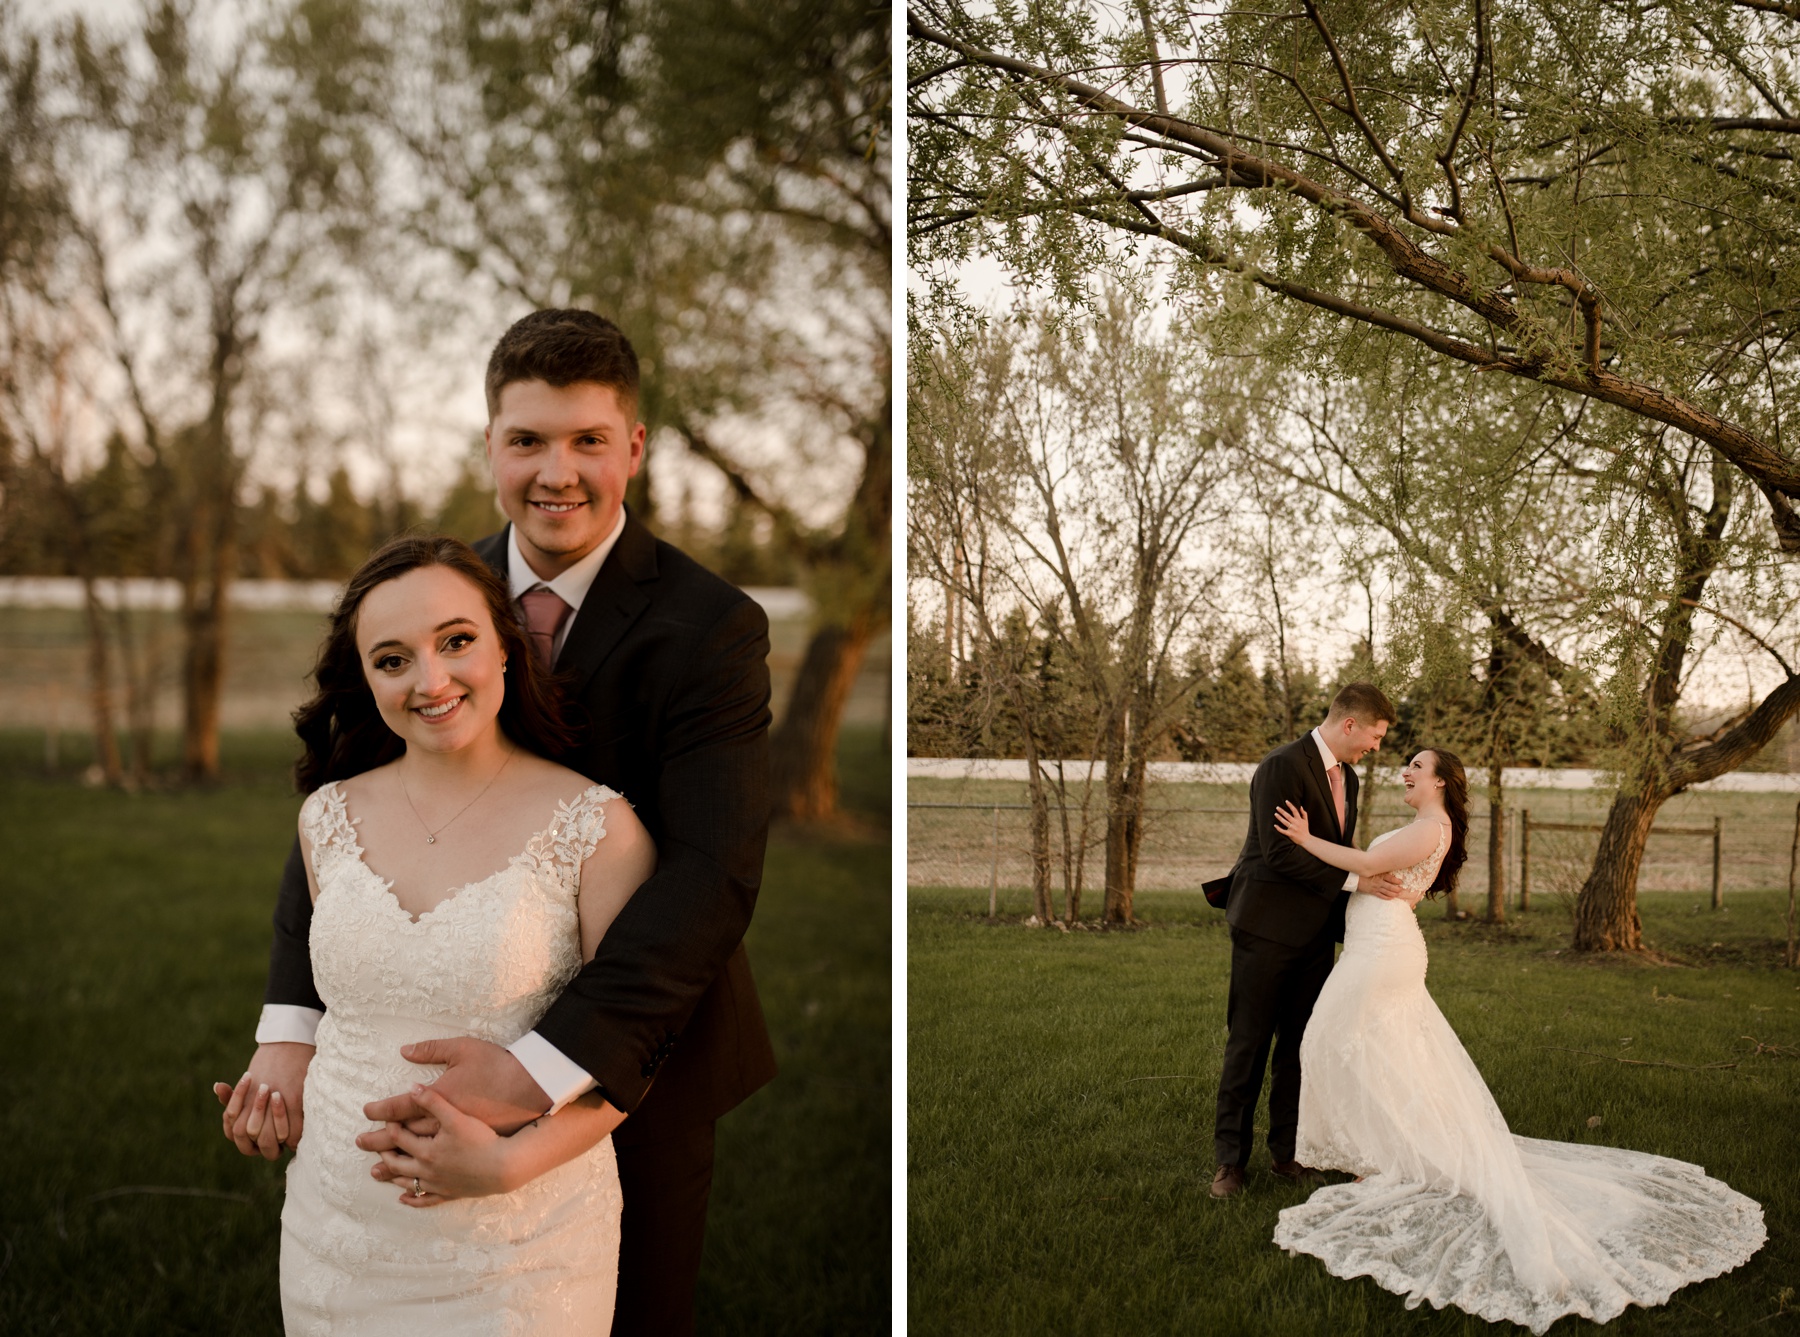 Manitoba spring wedding, prairie wedding portraits, Winnipeg wedding photographer, Manitoba weddings, Canadian elopement photography, sunset wedding portraits, lace mermaid wedding dress